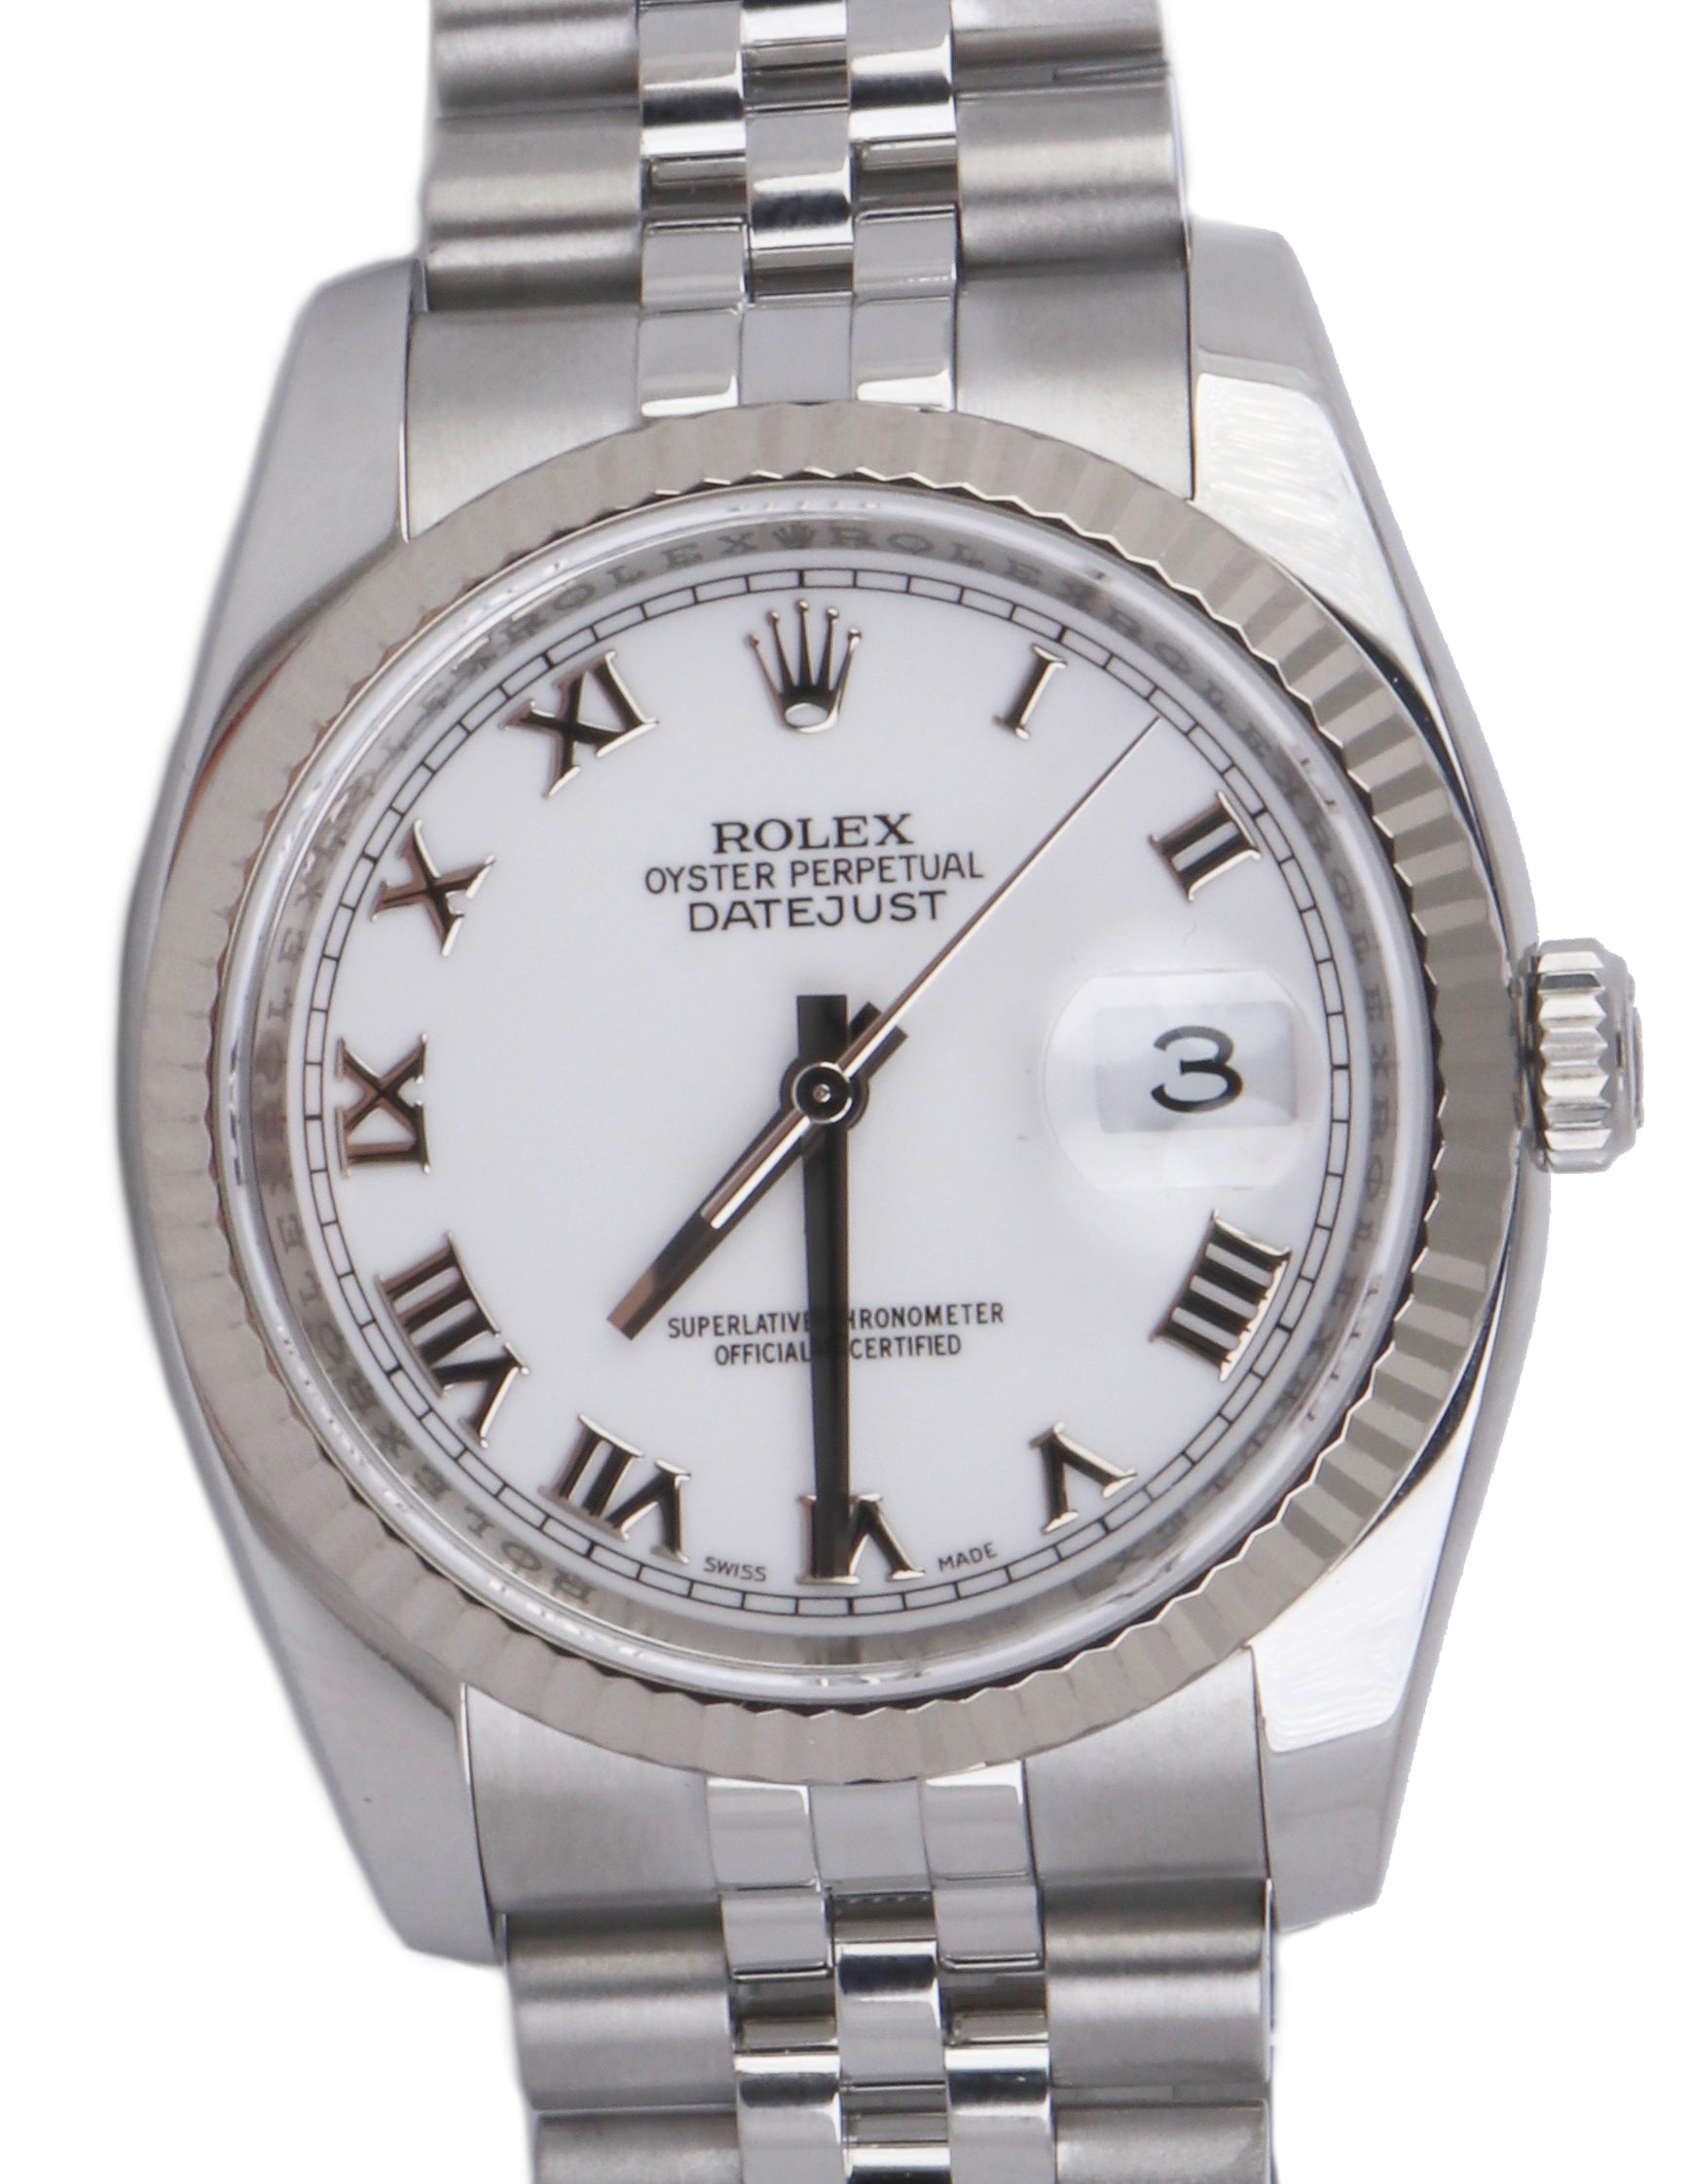 2012 Mint Rolex DateJust 116234 36mm White Roman Numeral Jubilee Date Watch